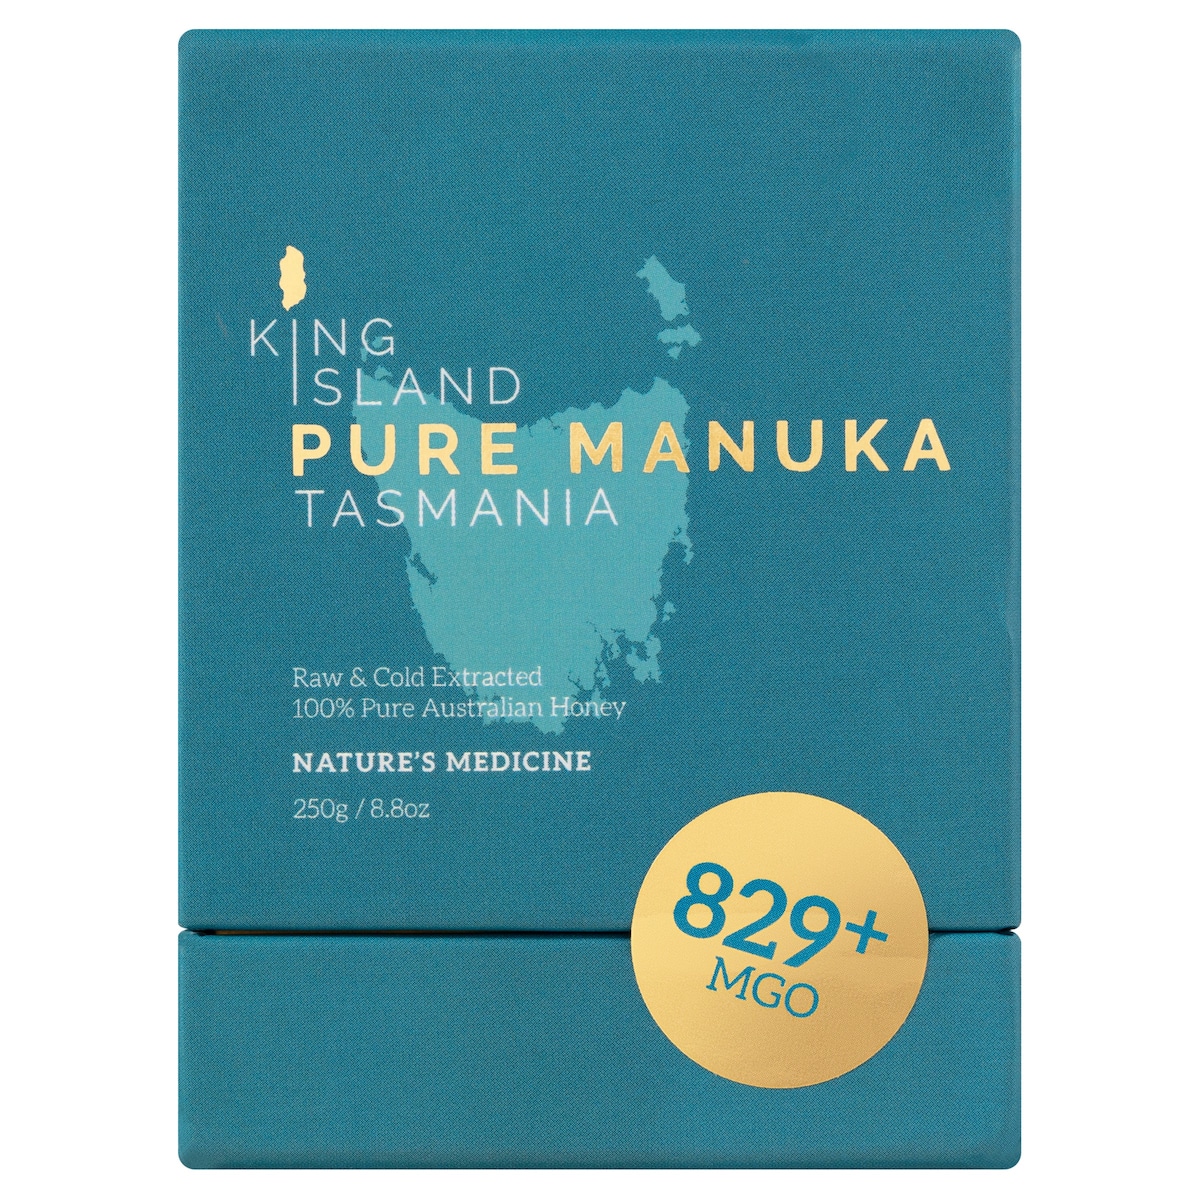 King Island Pure Manuka Tasmania MGO 829+ 250g